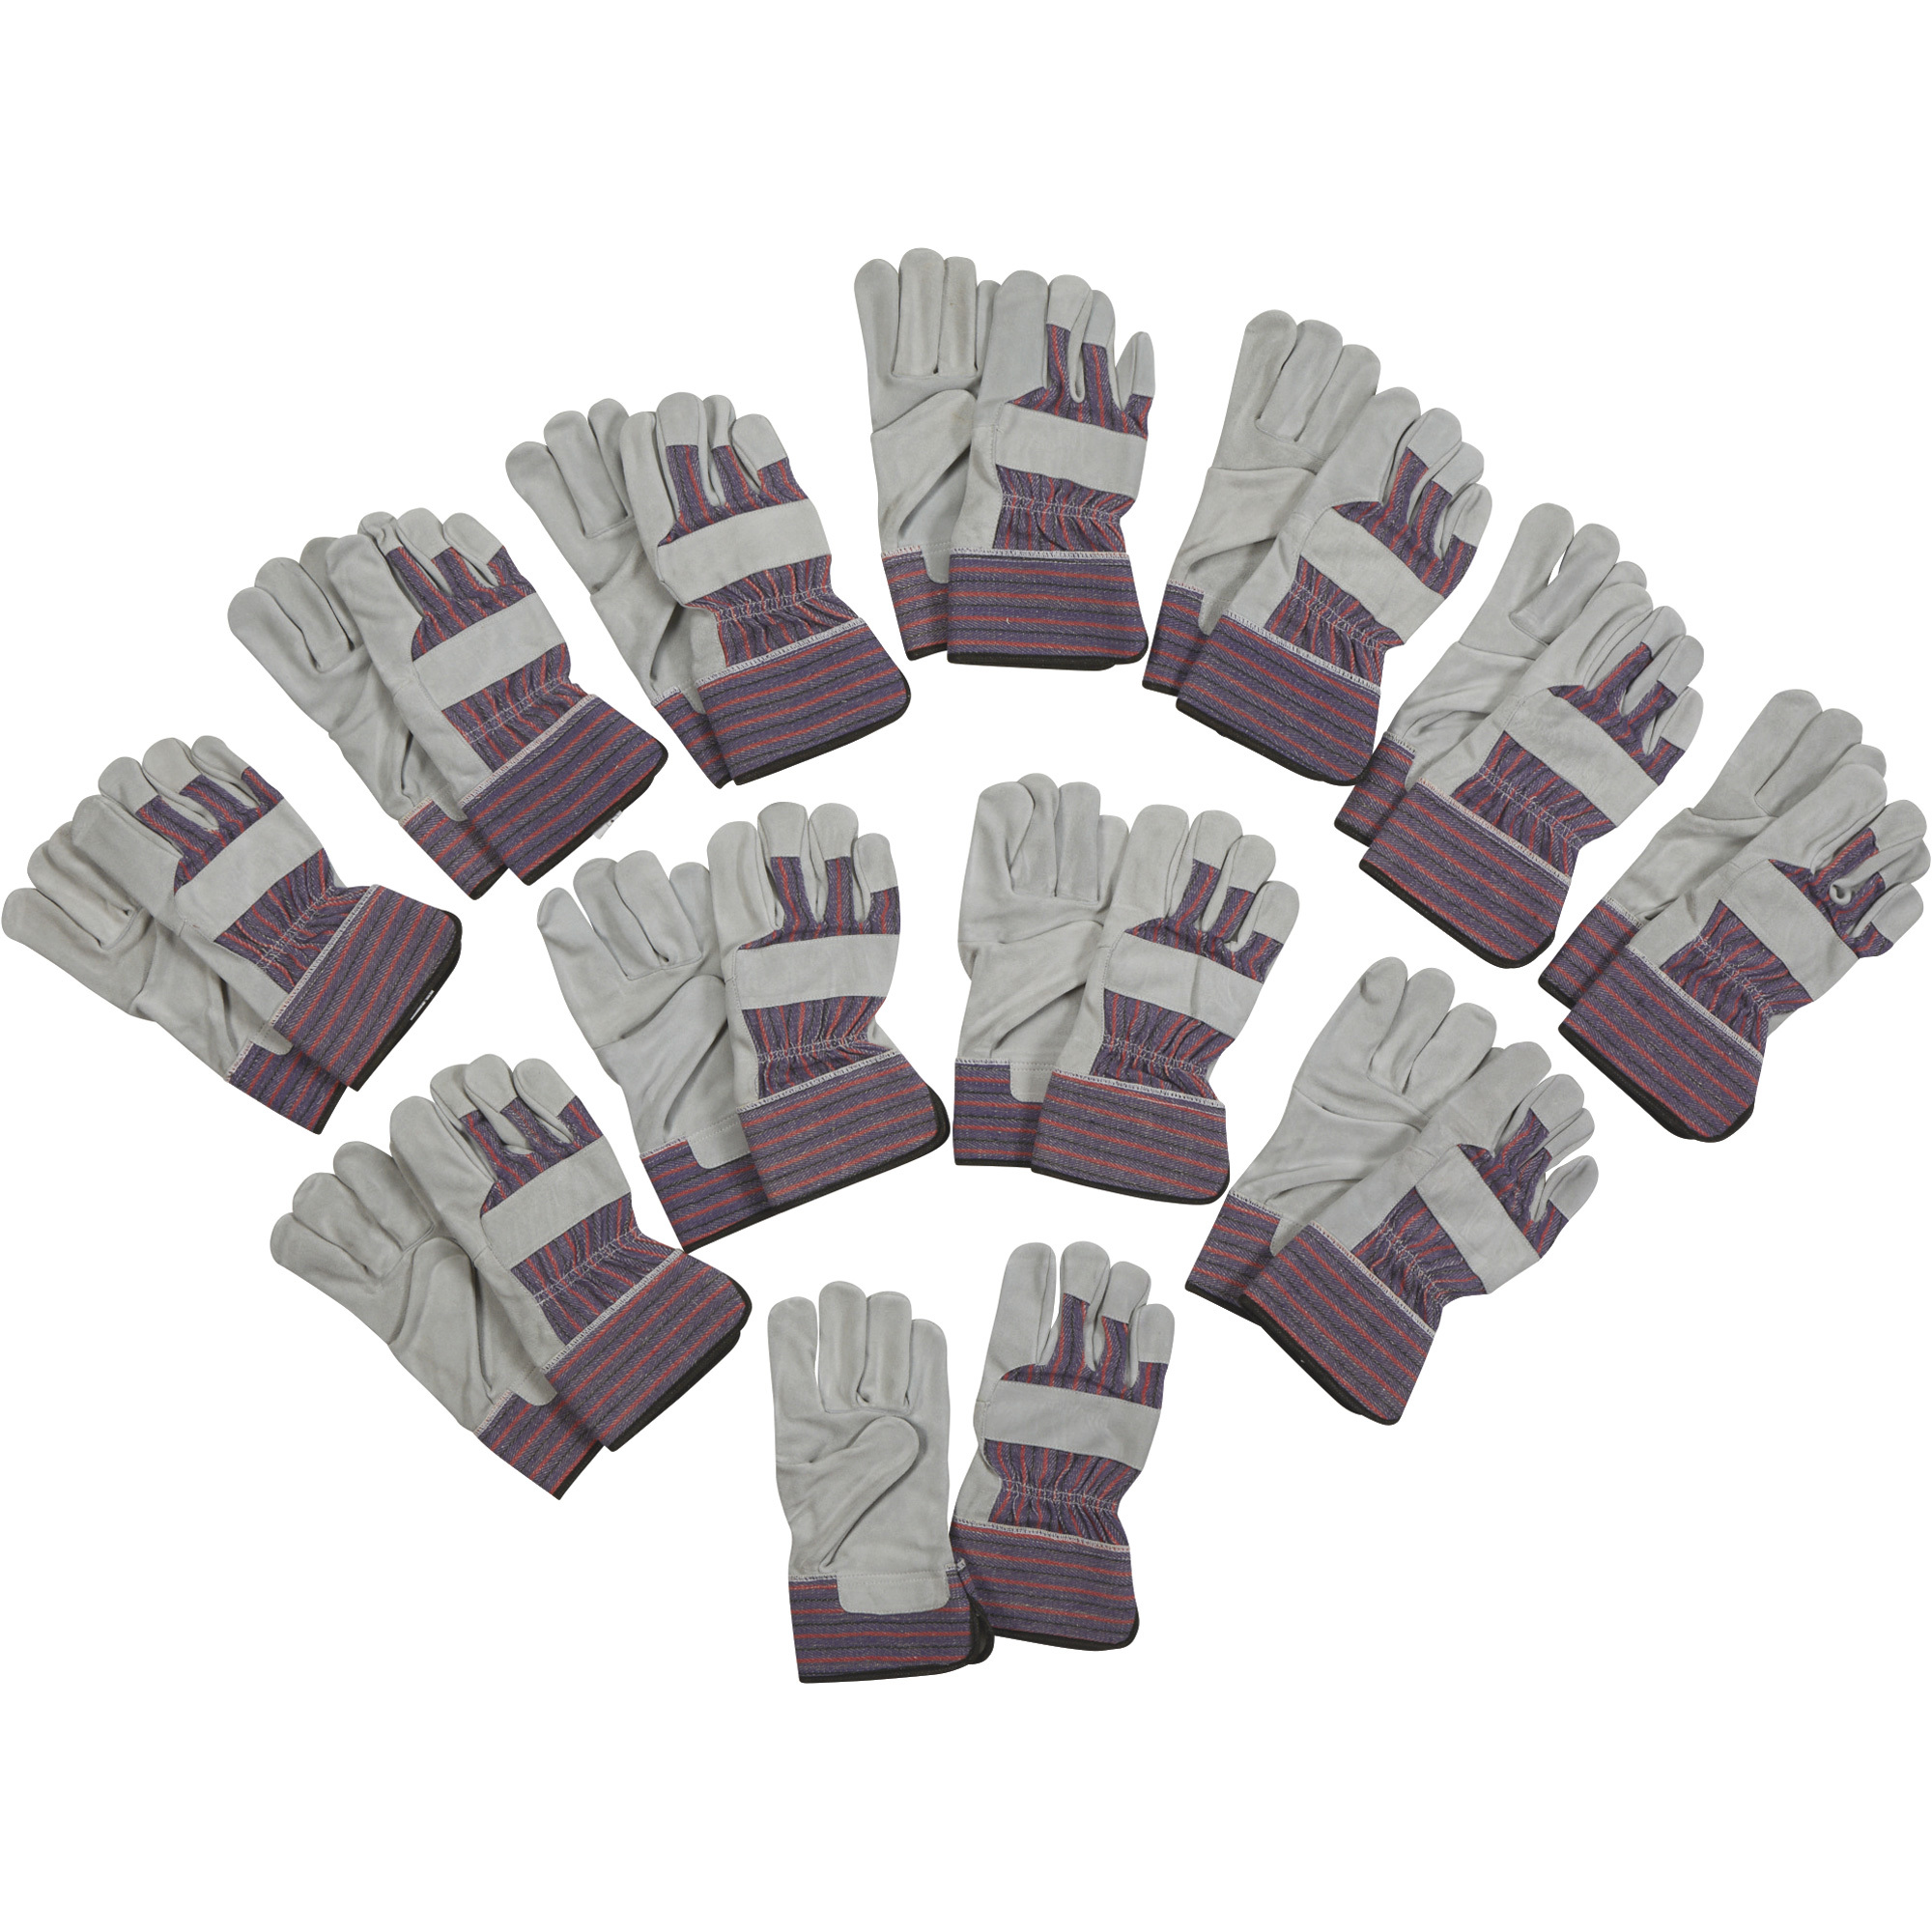 Ironton Work Gloves with Split Cowhide Palm â 12 Pairs, Gray, One Size